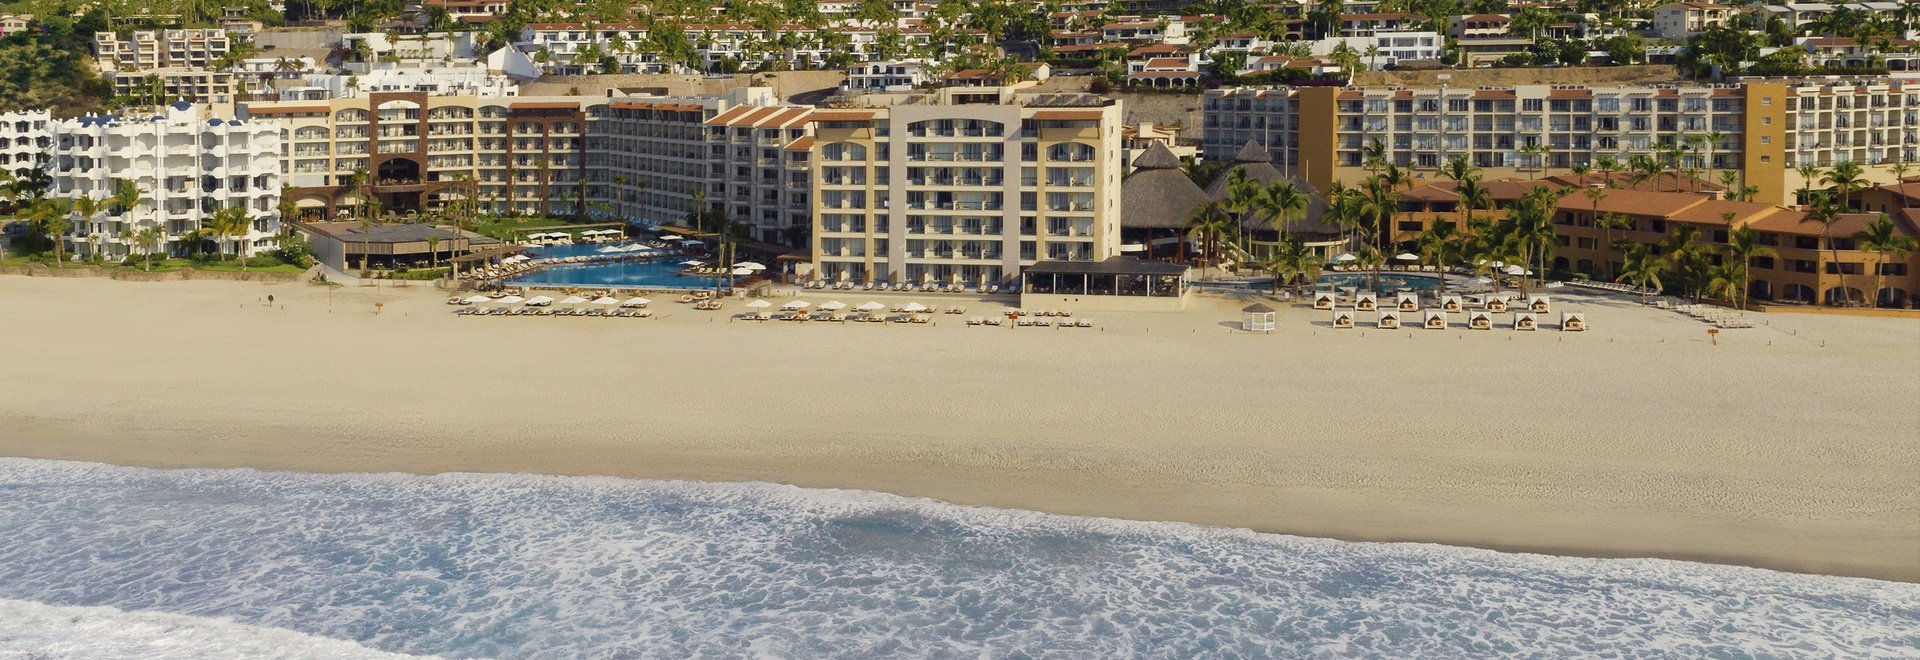 Hotel Krystal Grand Los Cabos - KRYSTAL GRAND LOS CABOS